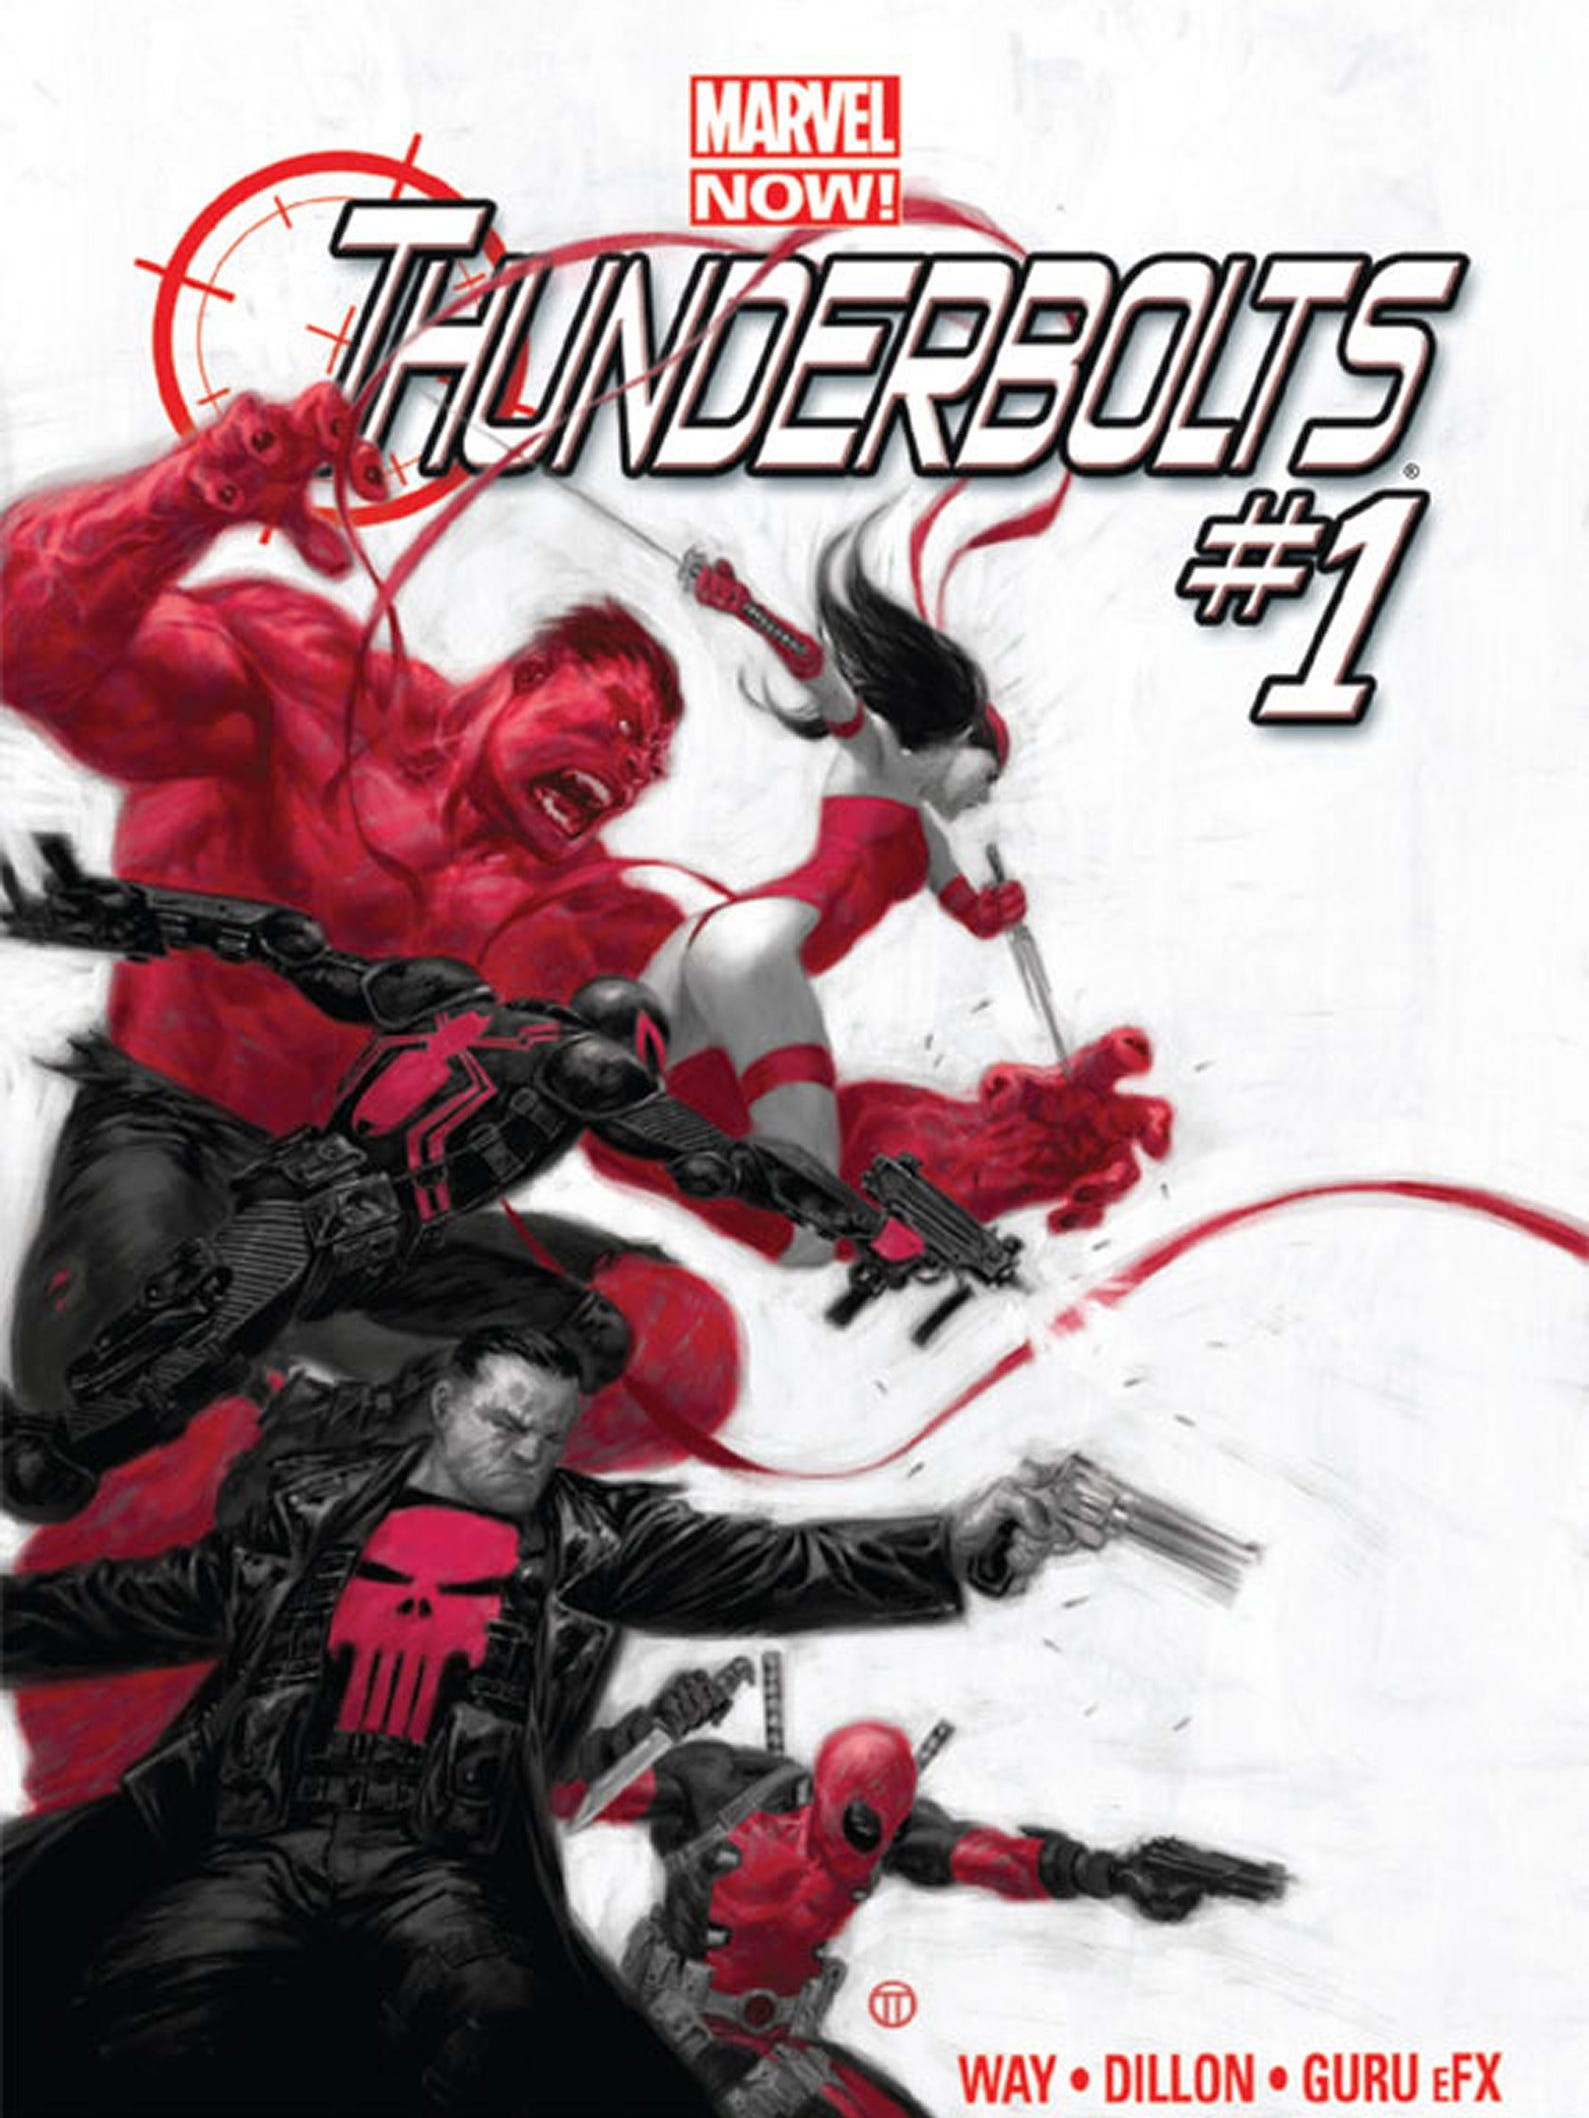 Marvels Popular Antiheroes Team For New Thunderbolts